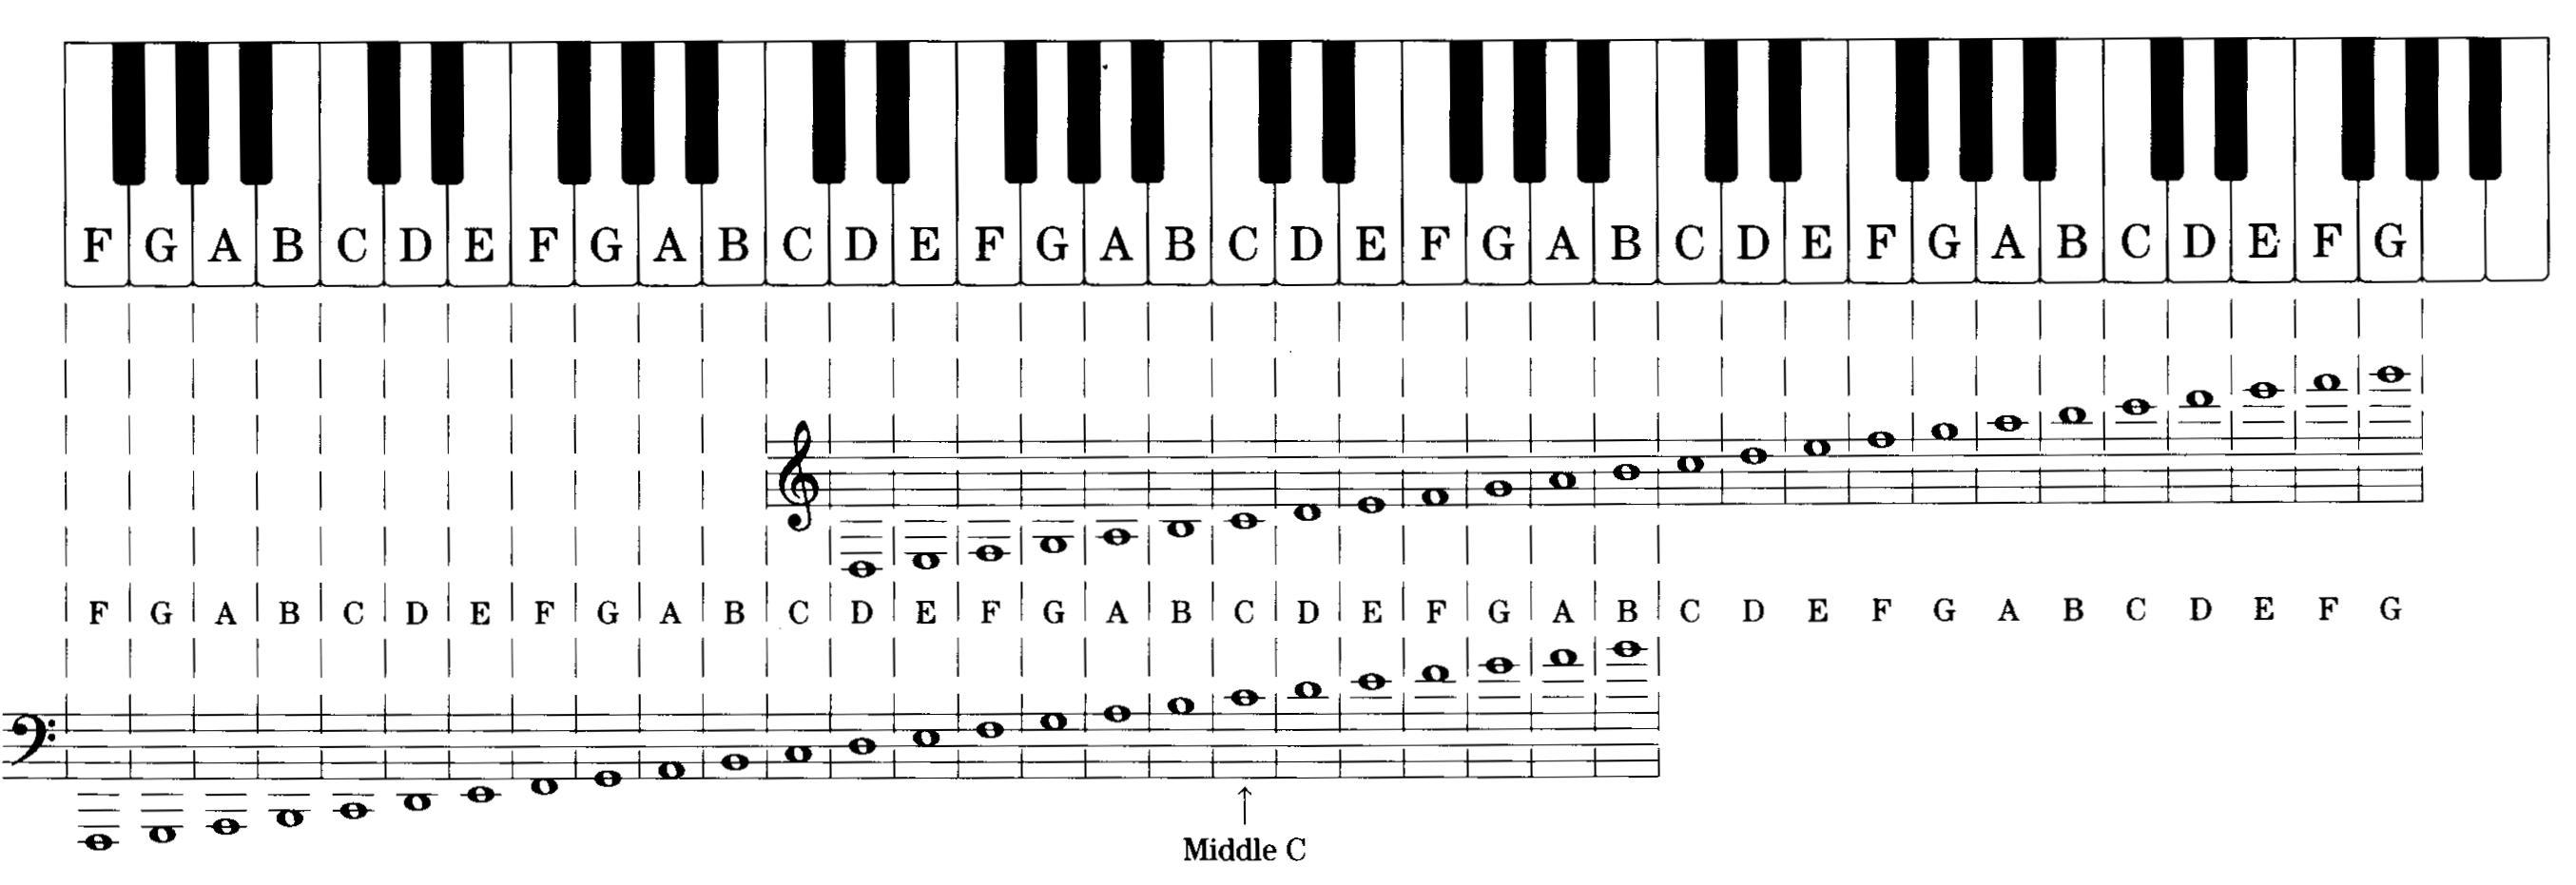 Басовый ключ пианино